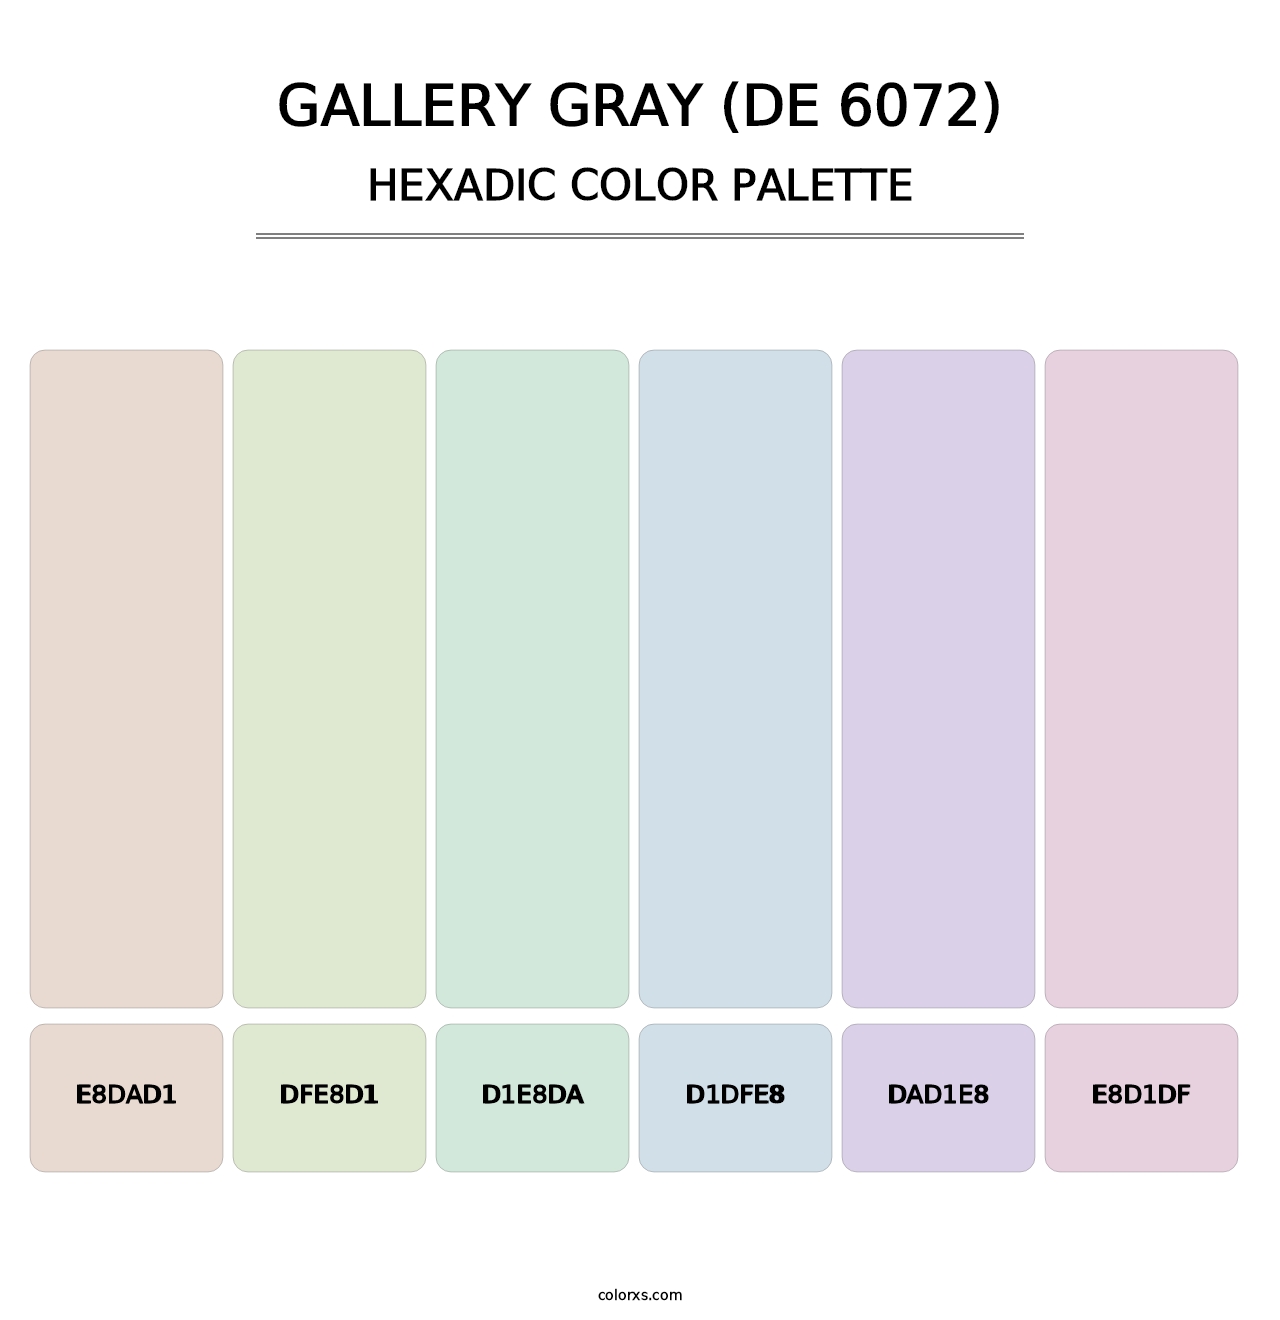 Gallery Gray (DE 6072) - Hexadic Color Palette